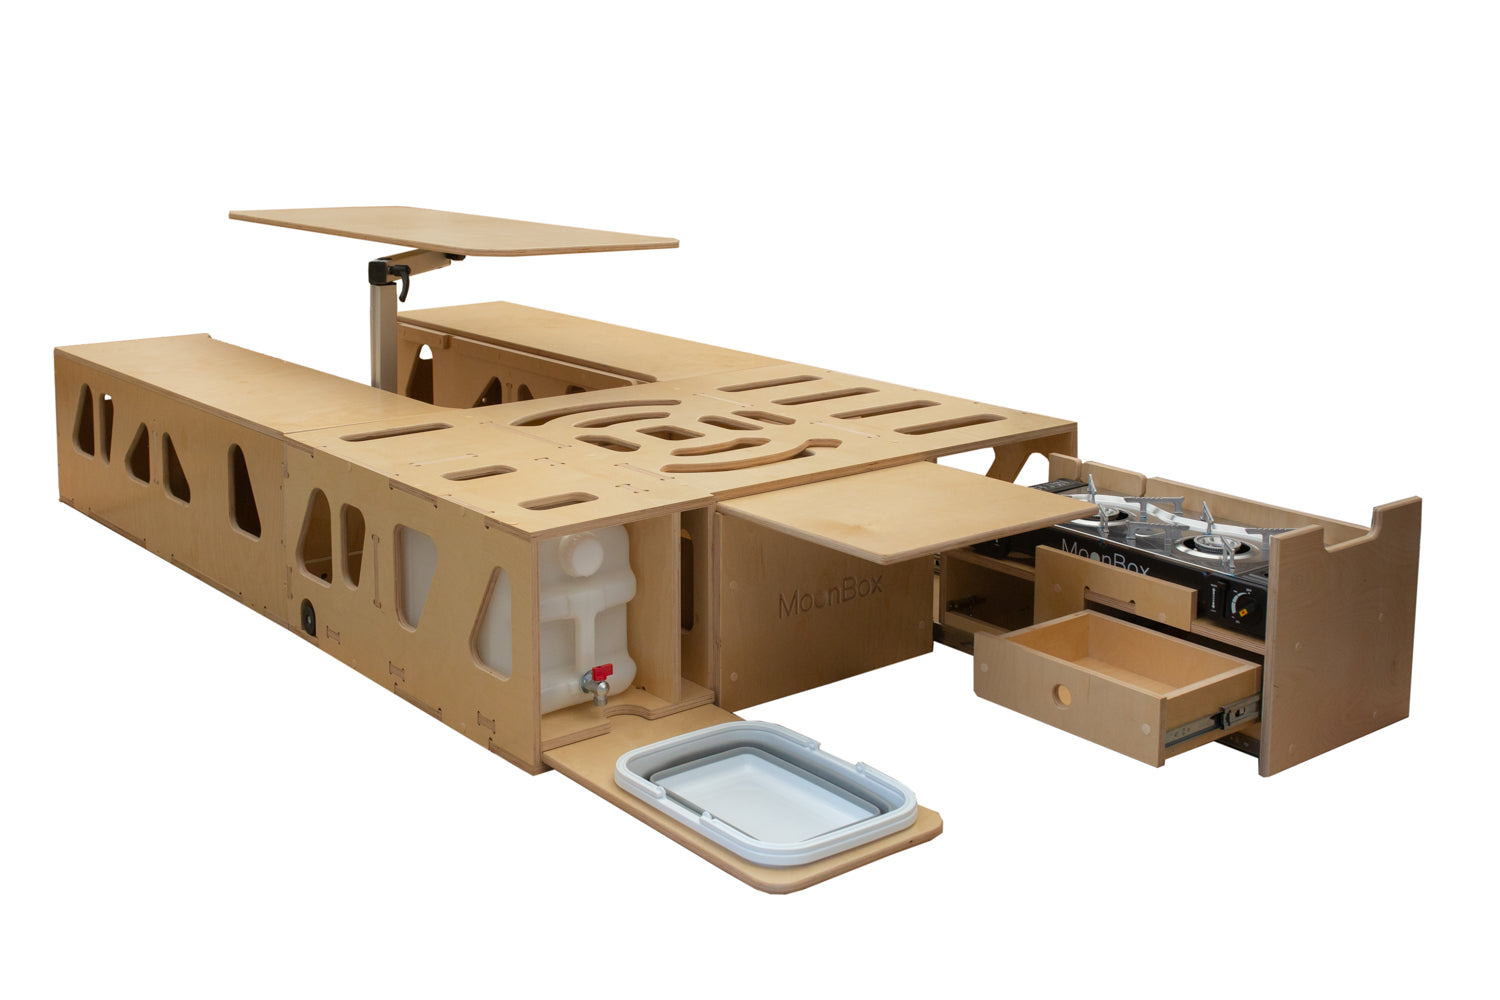 Moonbox Campingbox mit Tisch Van/Bus 124cm Modify UV-Lack